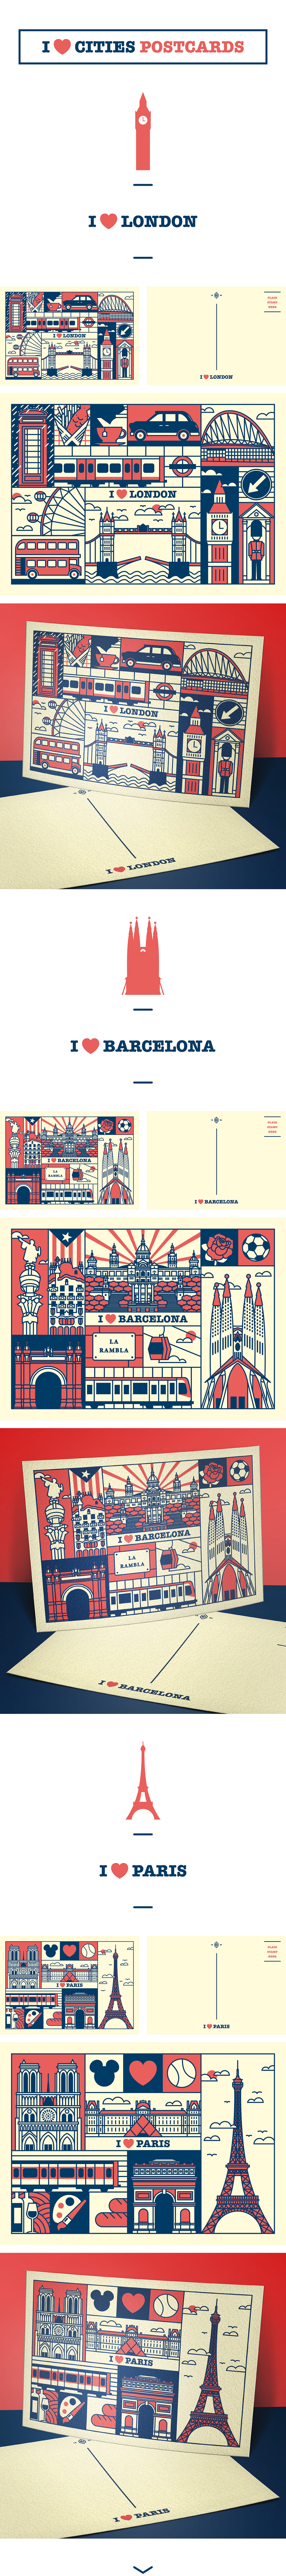 London barcelona Paris Cities city postcard Travel Icon eiffel tower big ben Sagrad Familia tourism Food  drink sights